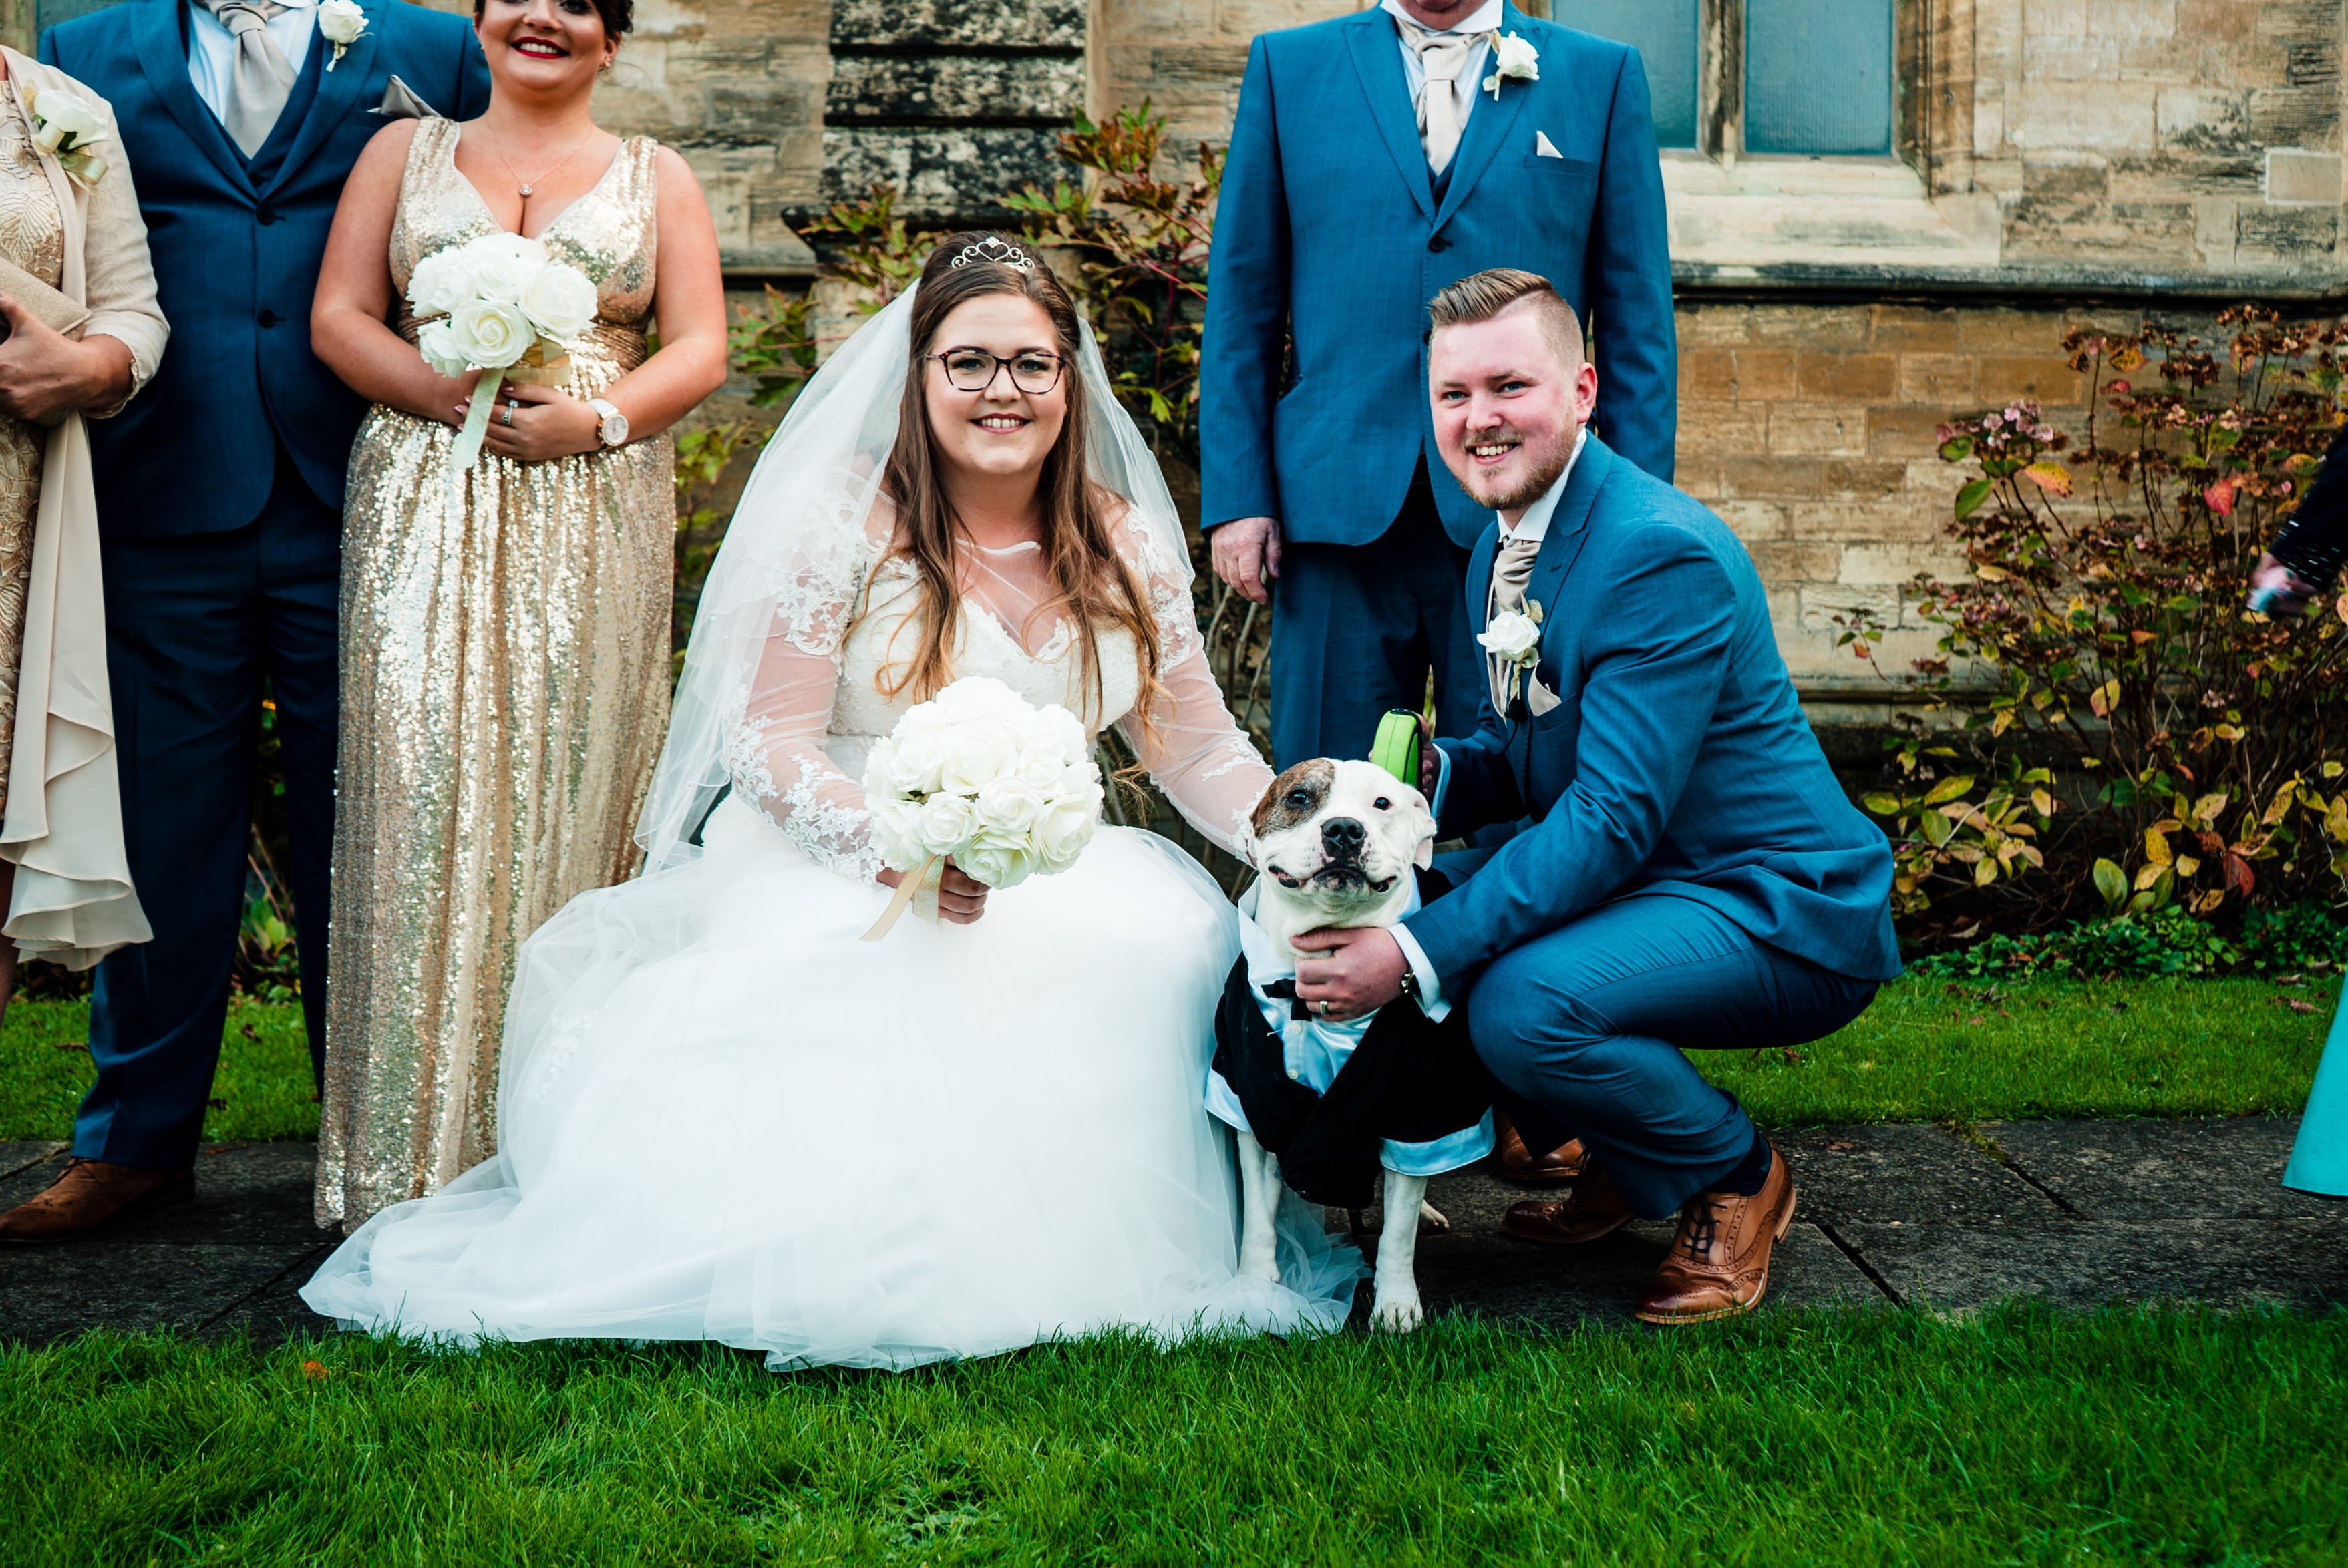 Wedding Photos With Their Dog